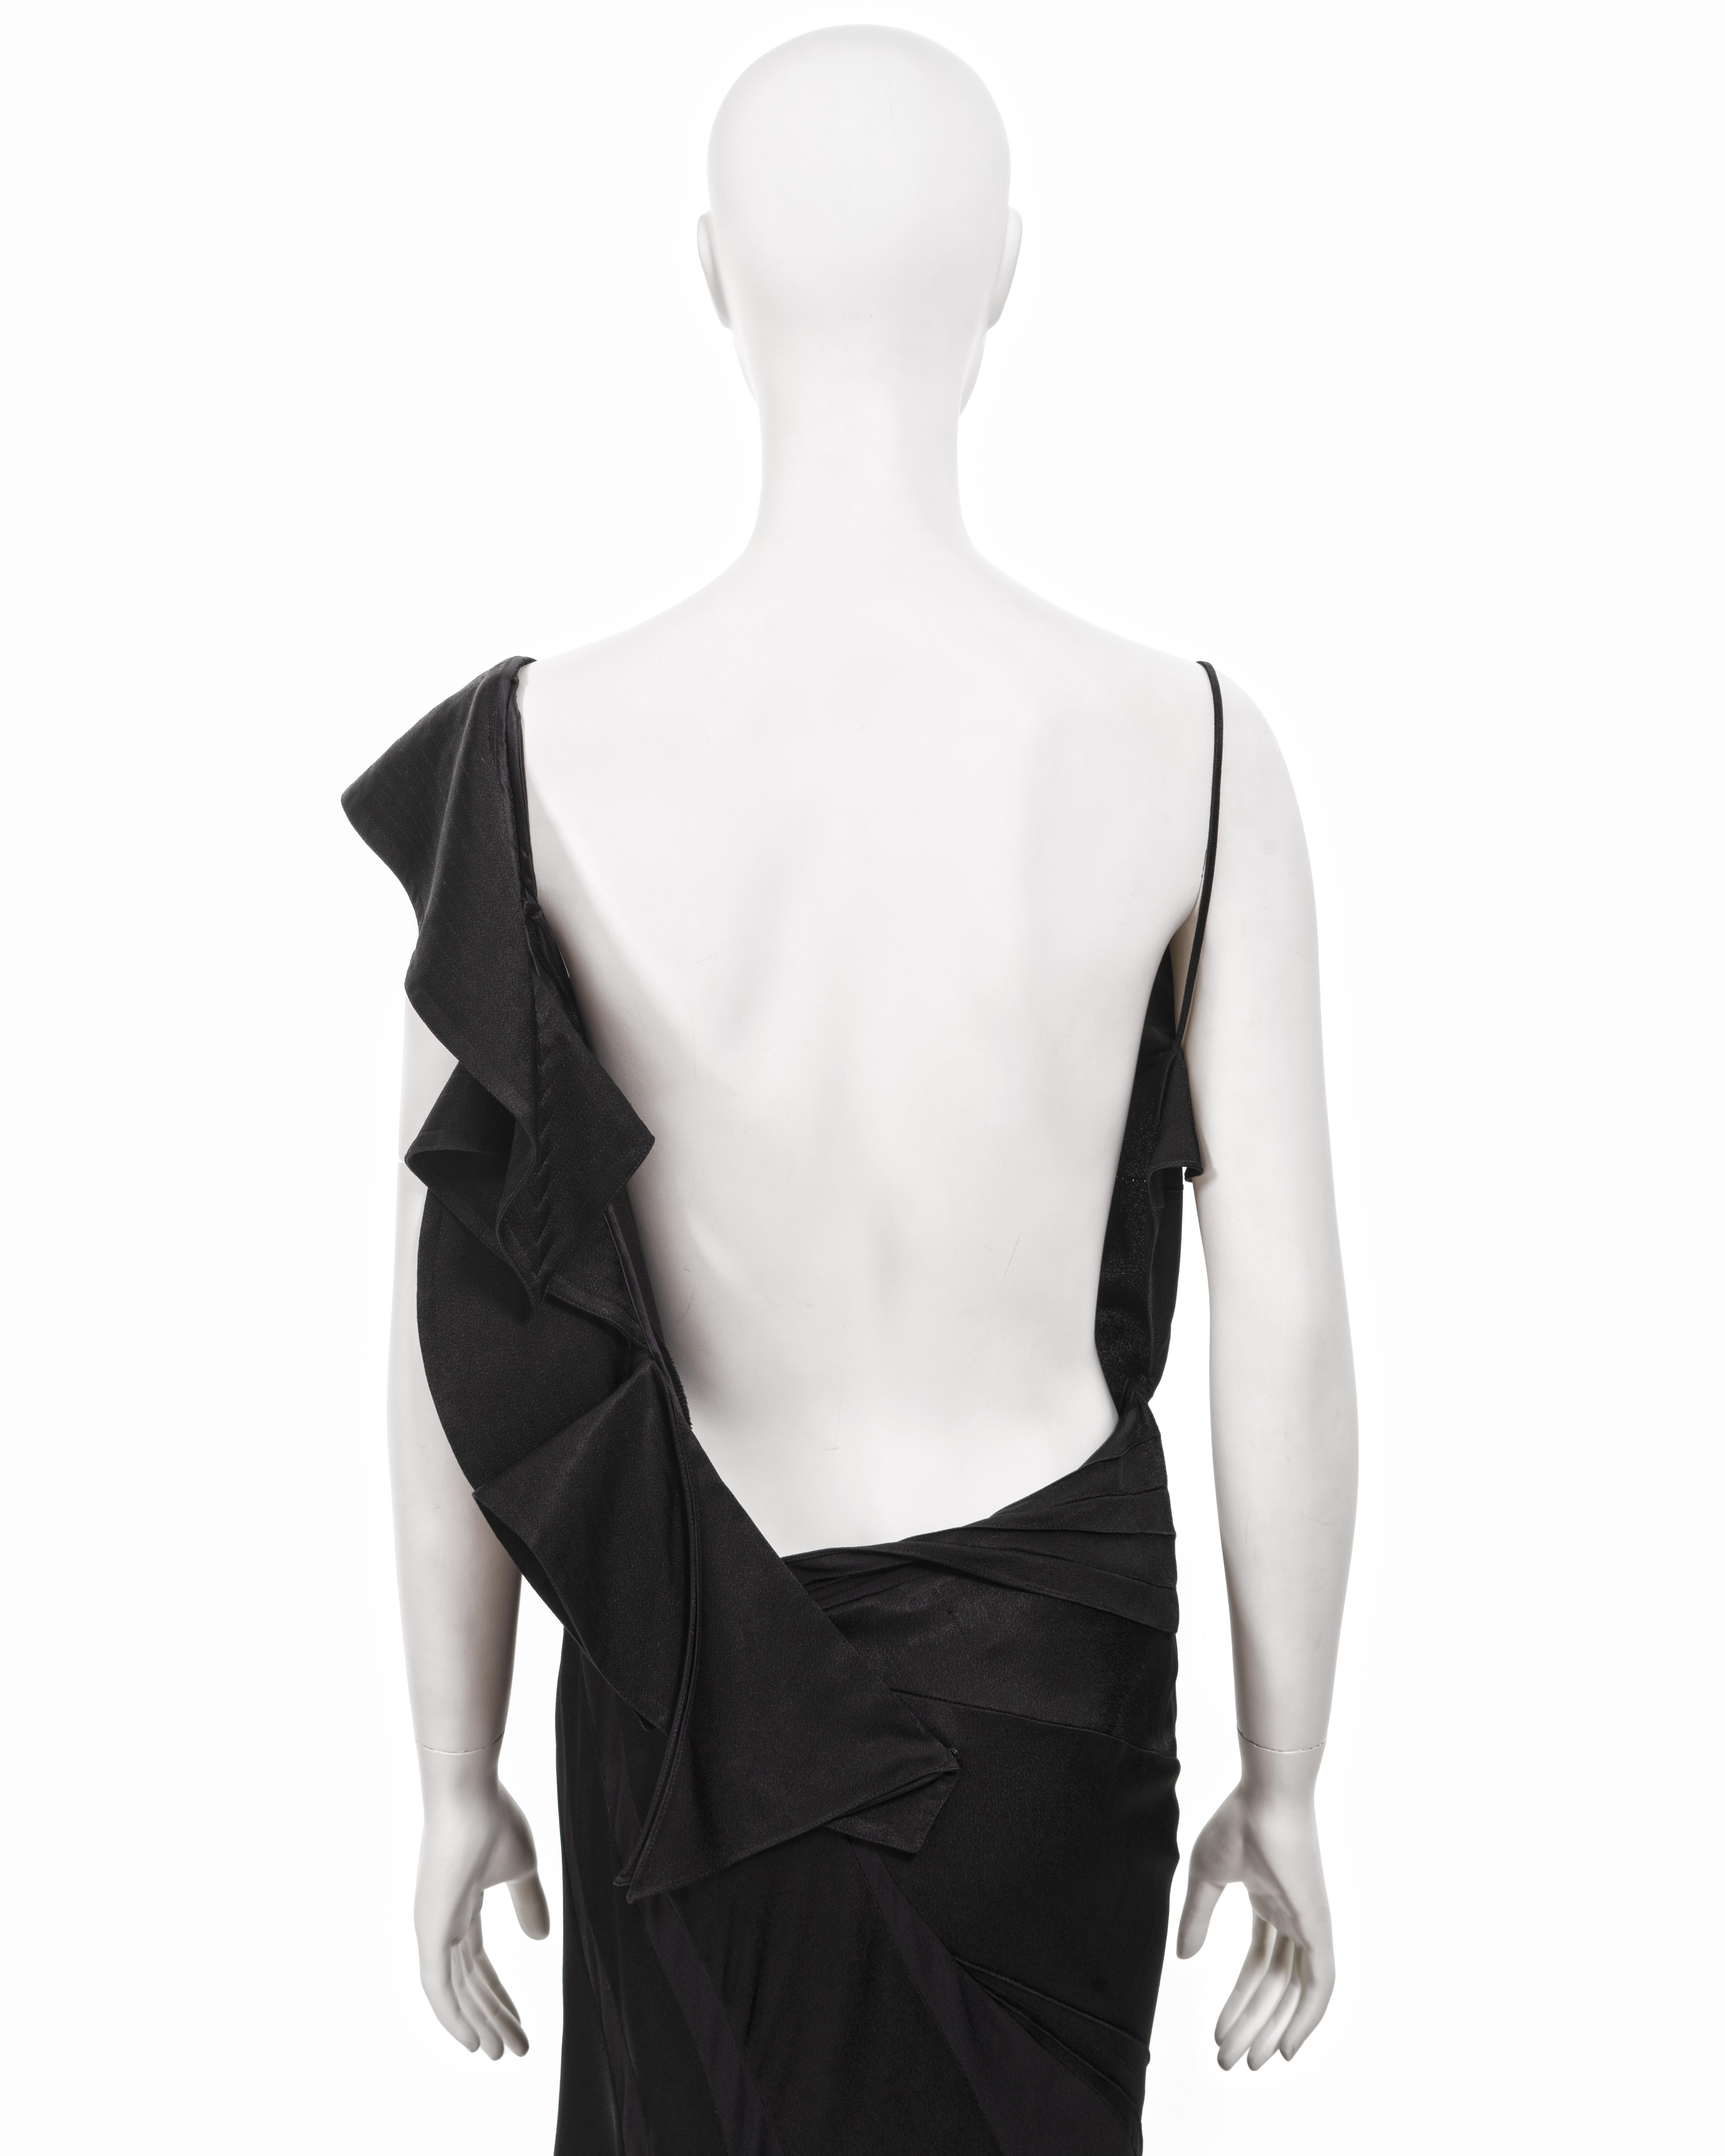 Christian Dior by John Galliano black bias-cut satin evening dress, fw 2000 For Sale 9